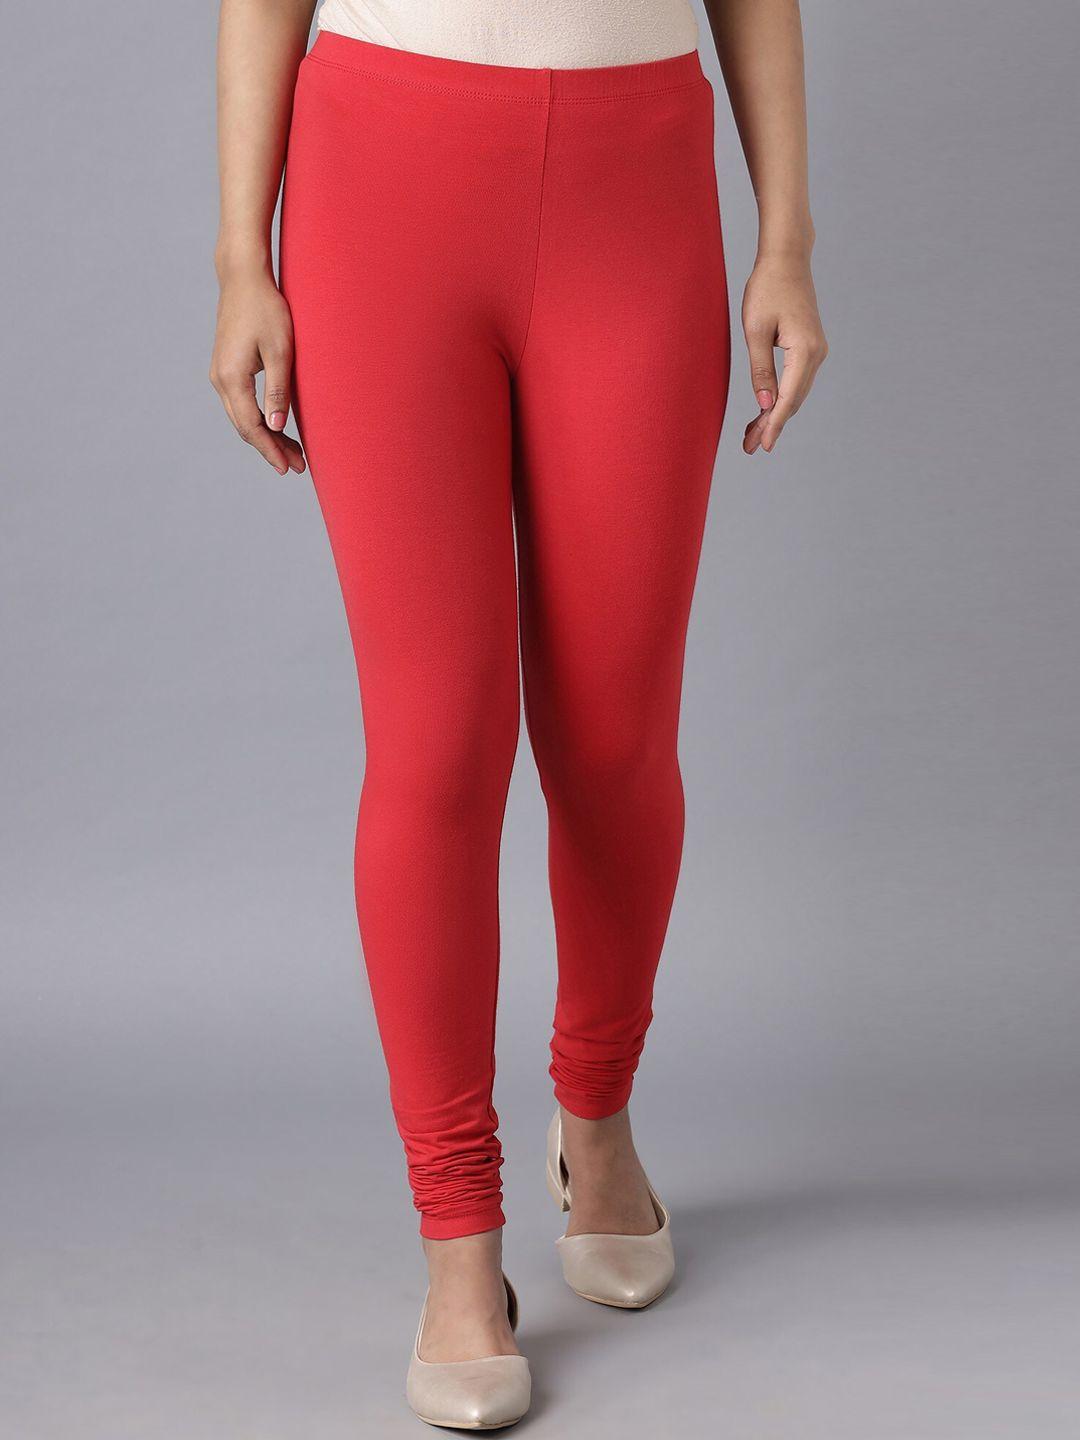 elleven women red solid ankle-length skin fit leggings